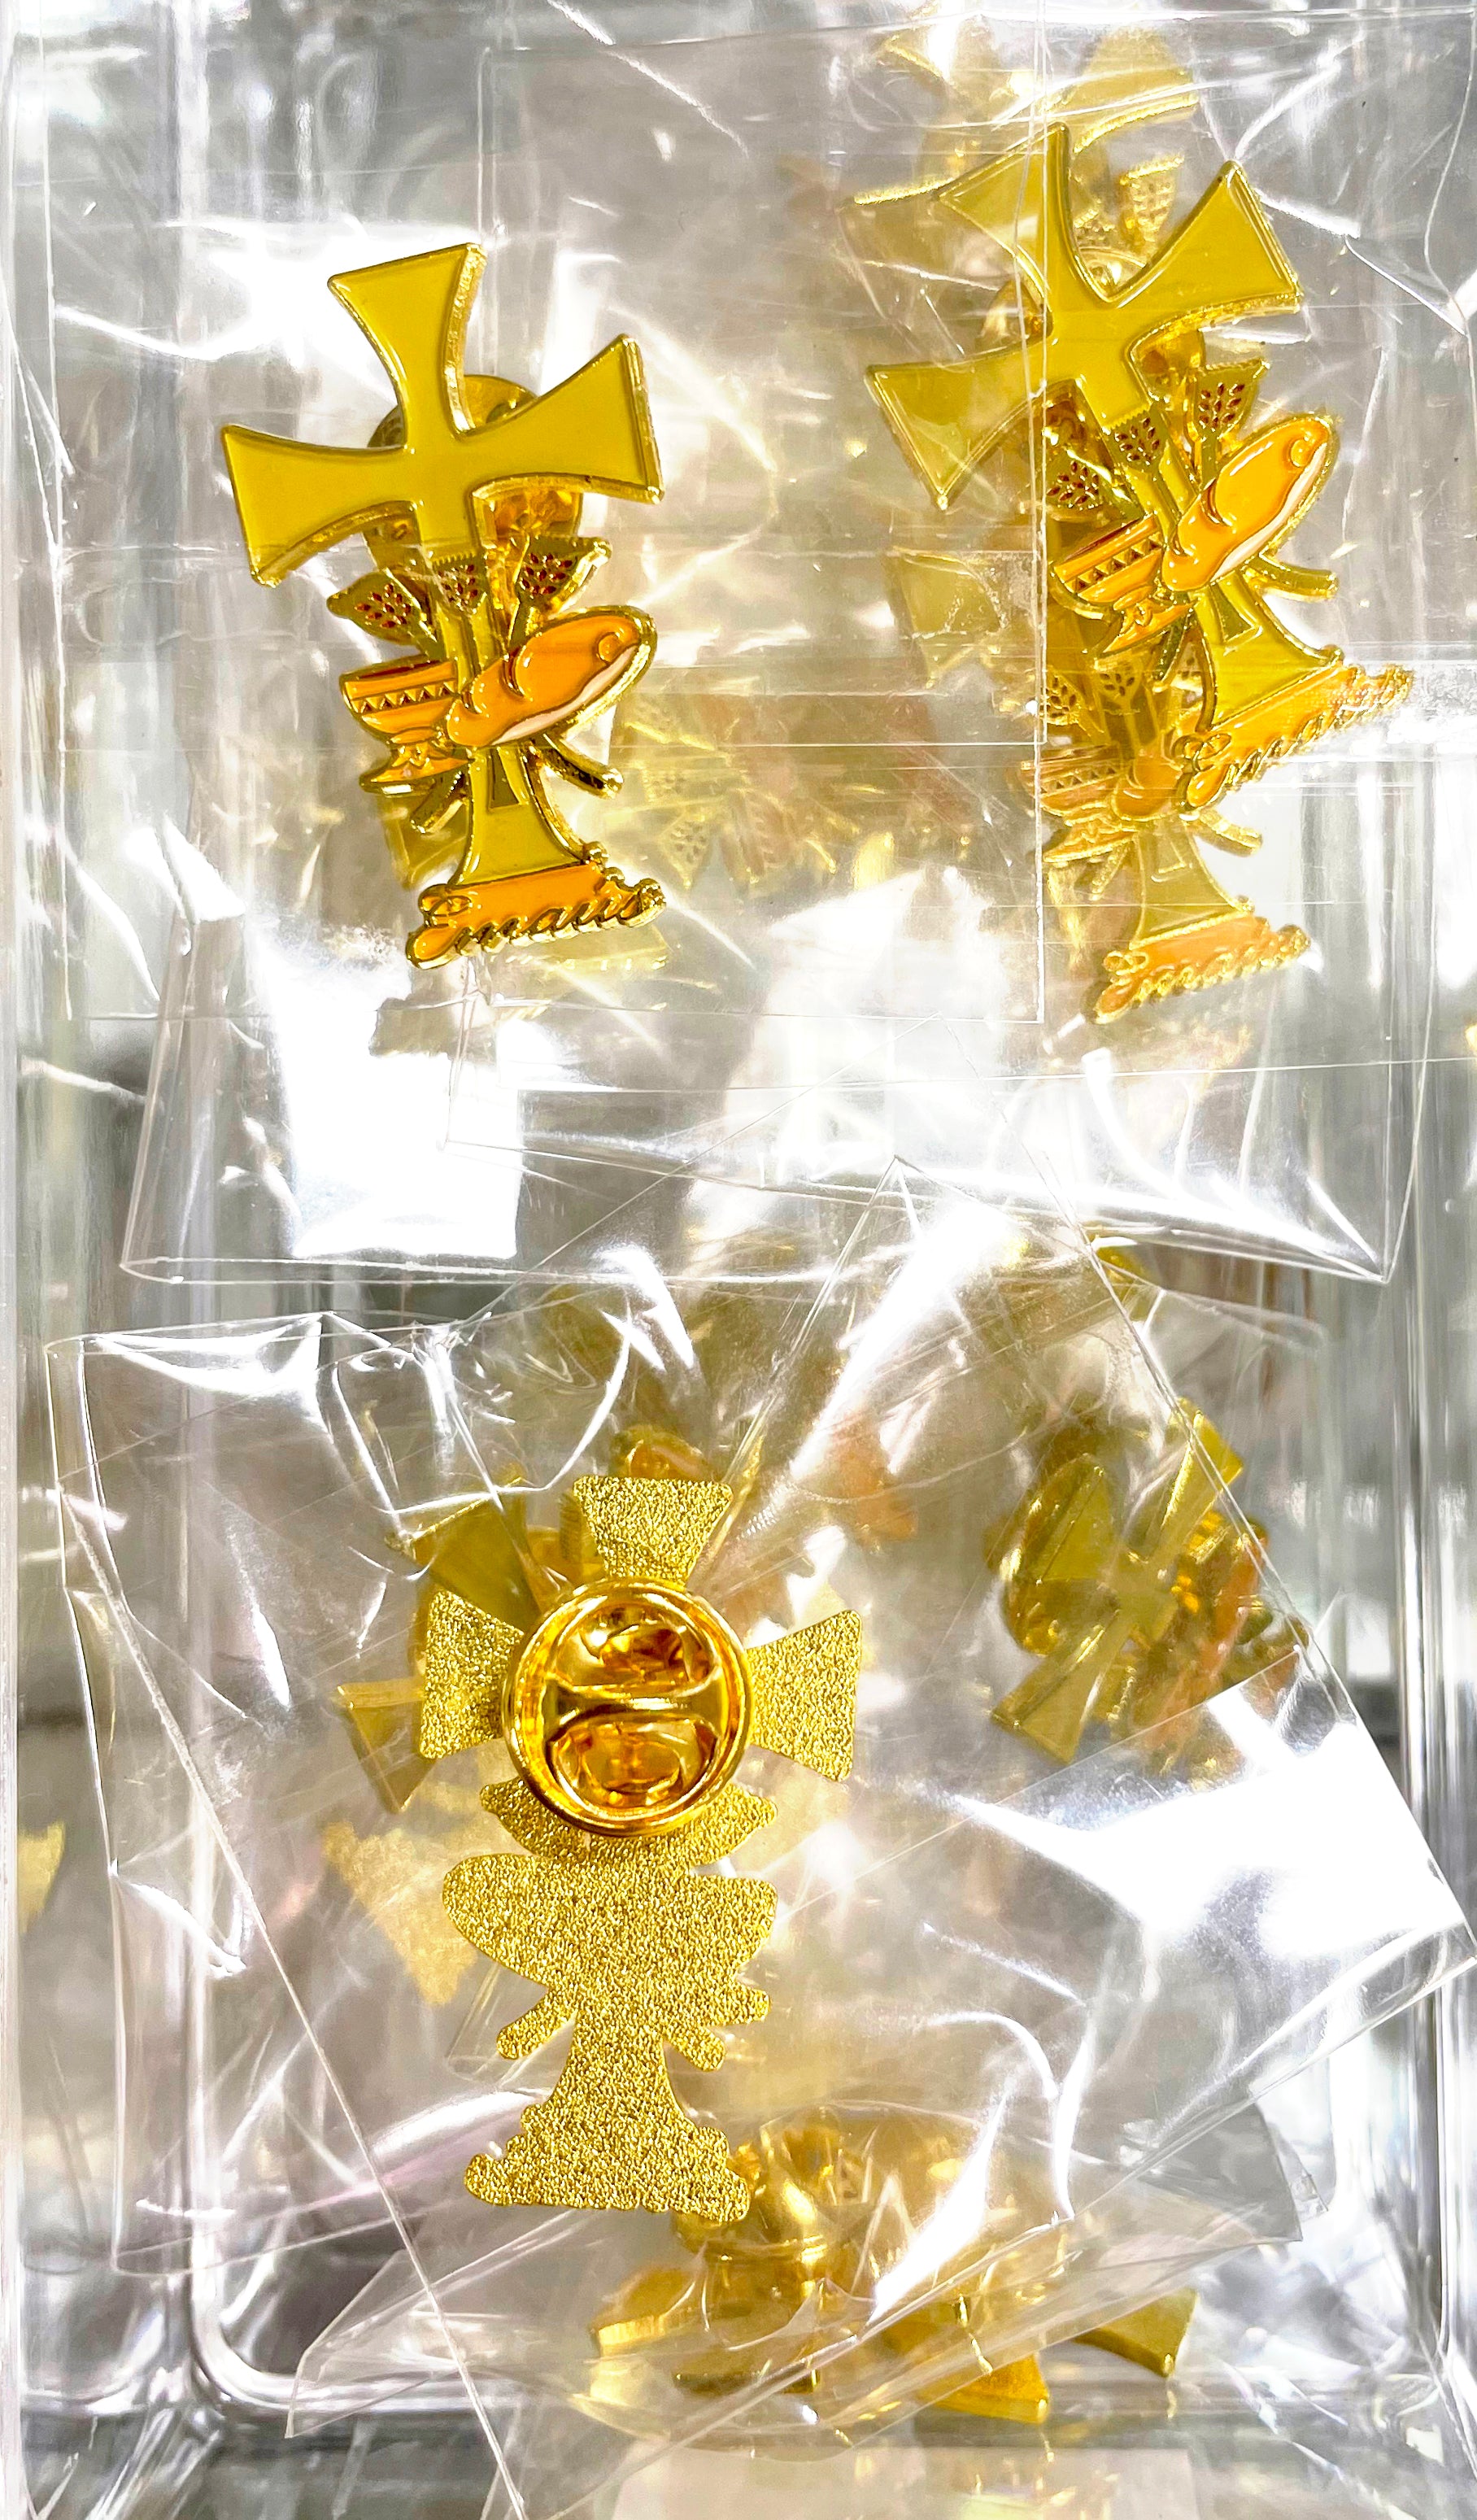 Emmaus lapel pin package of 12 units special for retreats made of golden metal- Pin de Emaús, paquete de 12 unidades especial para retiros hecho en metal dorado